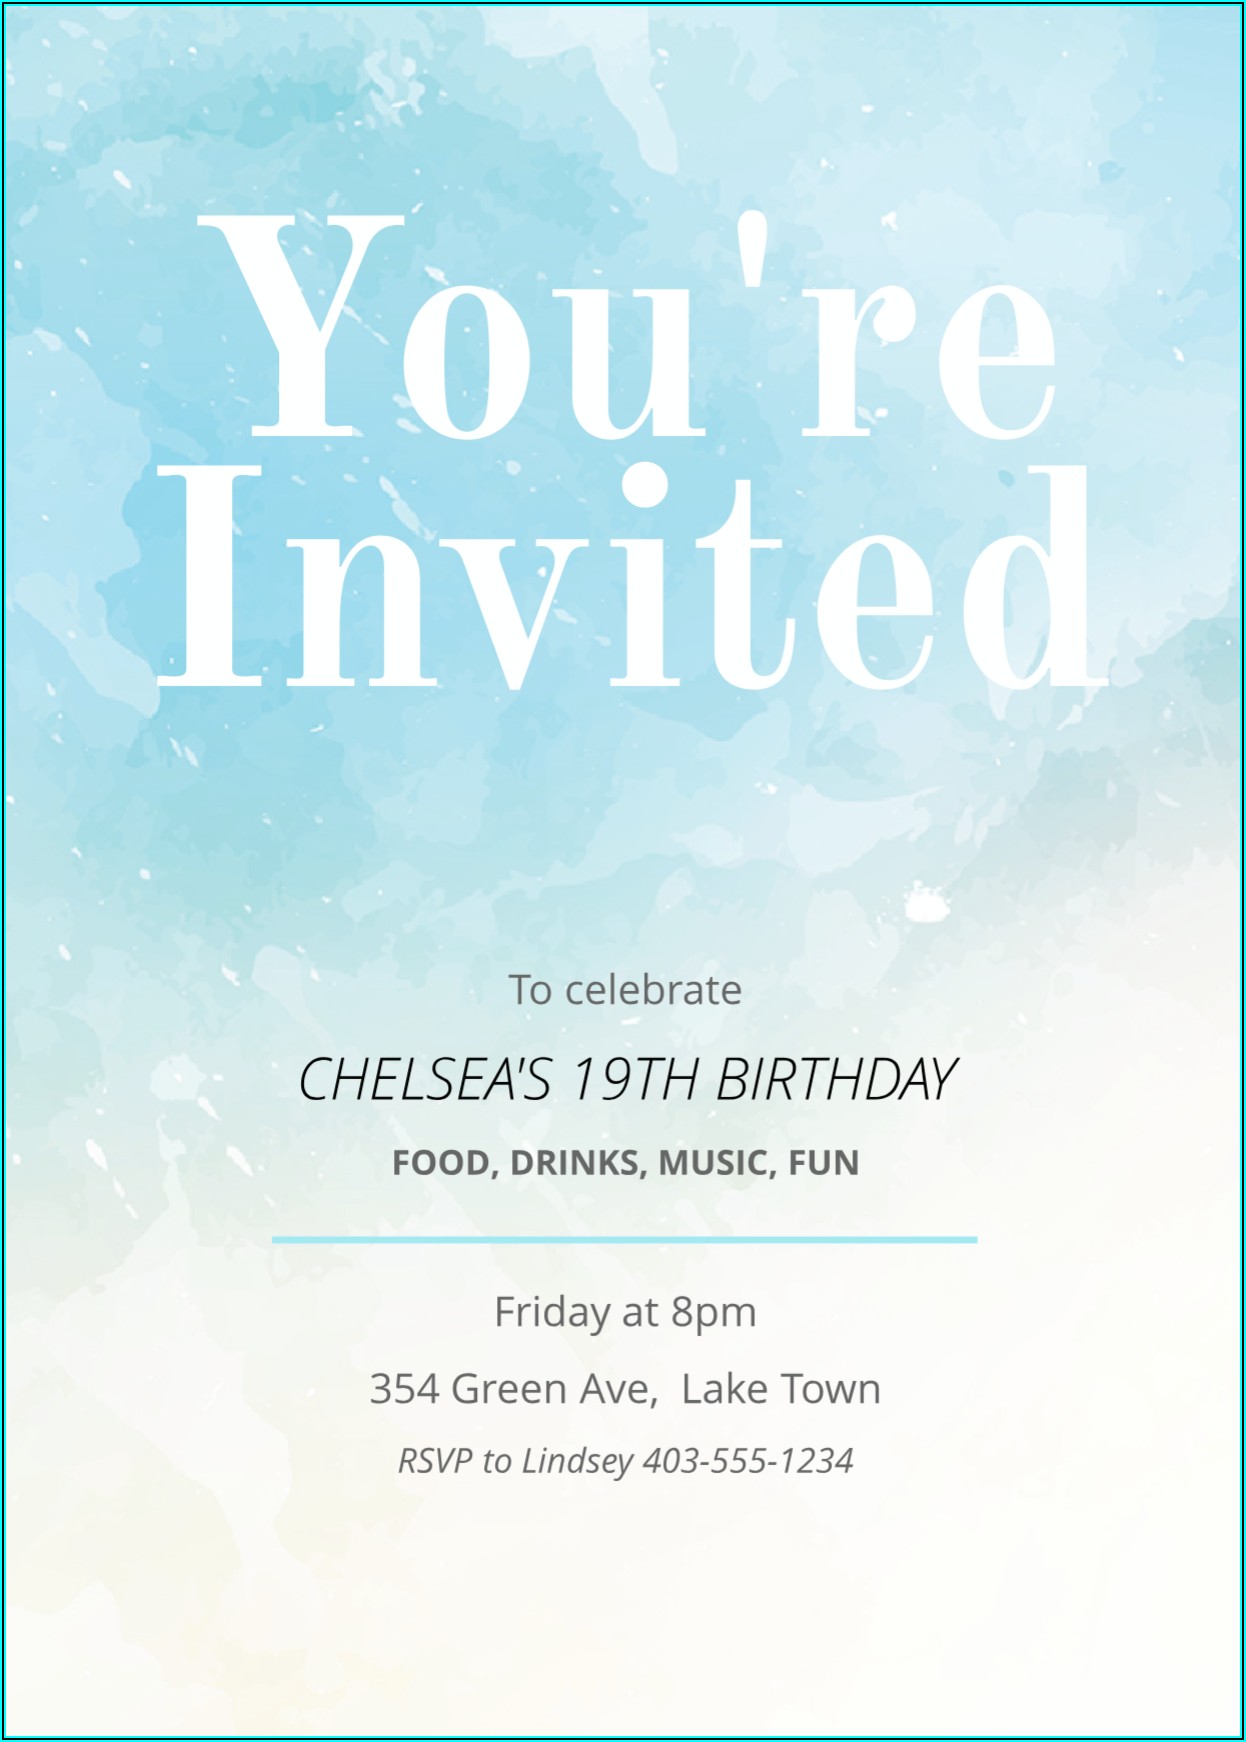 Free Birthday Invitation Card